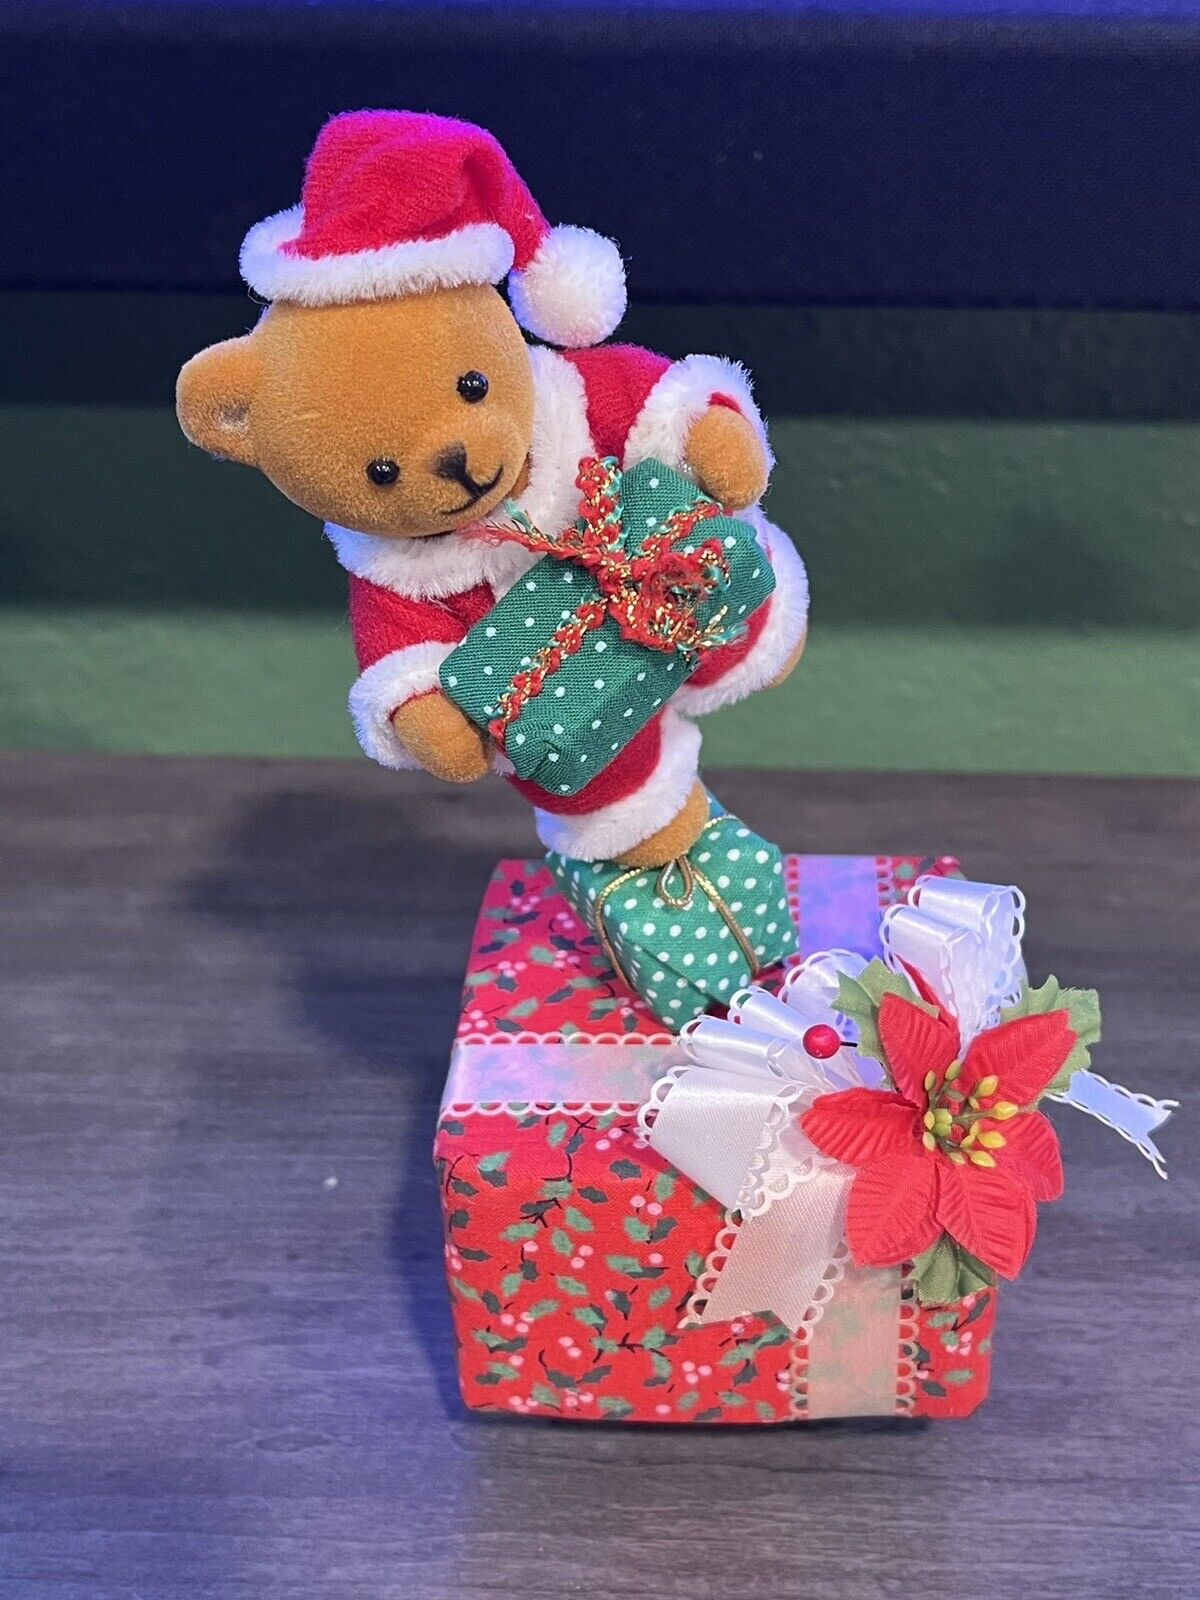 Vintage Christmas Present Music Box With Bear On Top Plays Jingle Bells